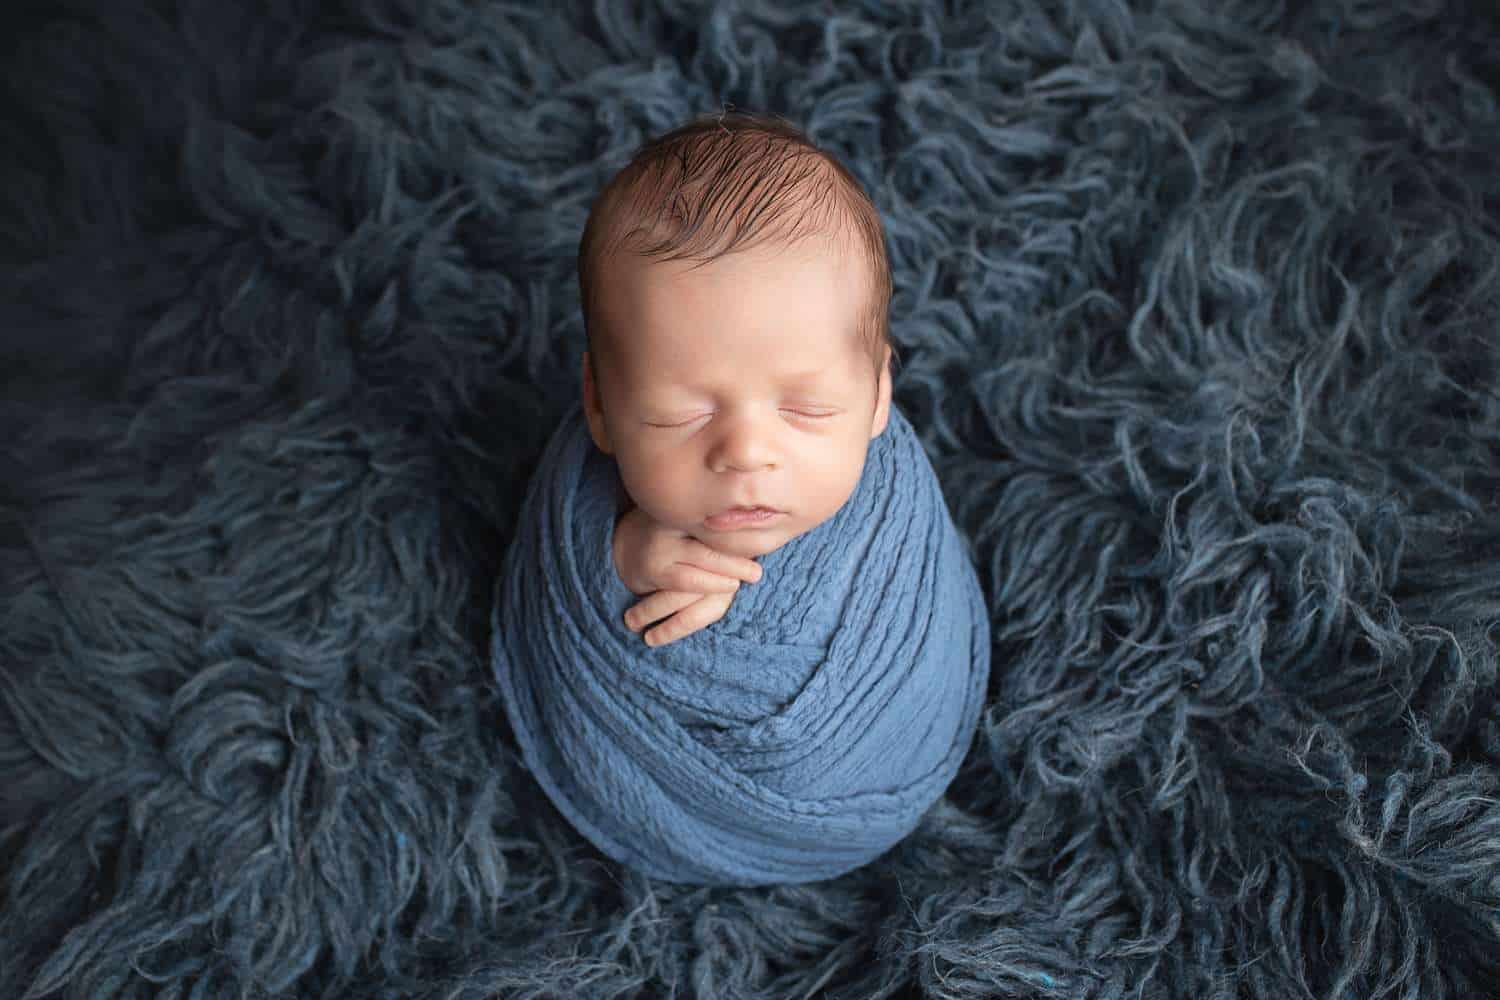 newborn photographer in rochester ny captures newborn baby boy asleep in a blue fur